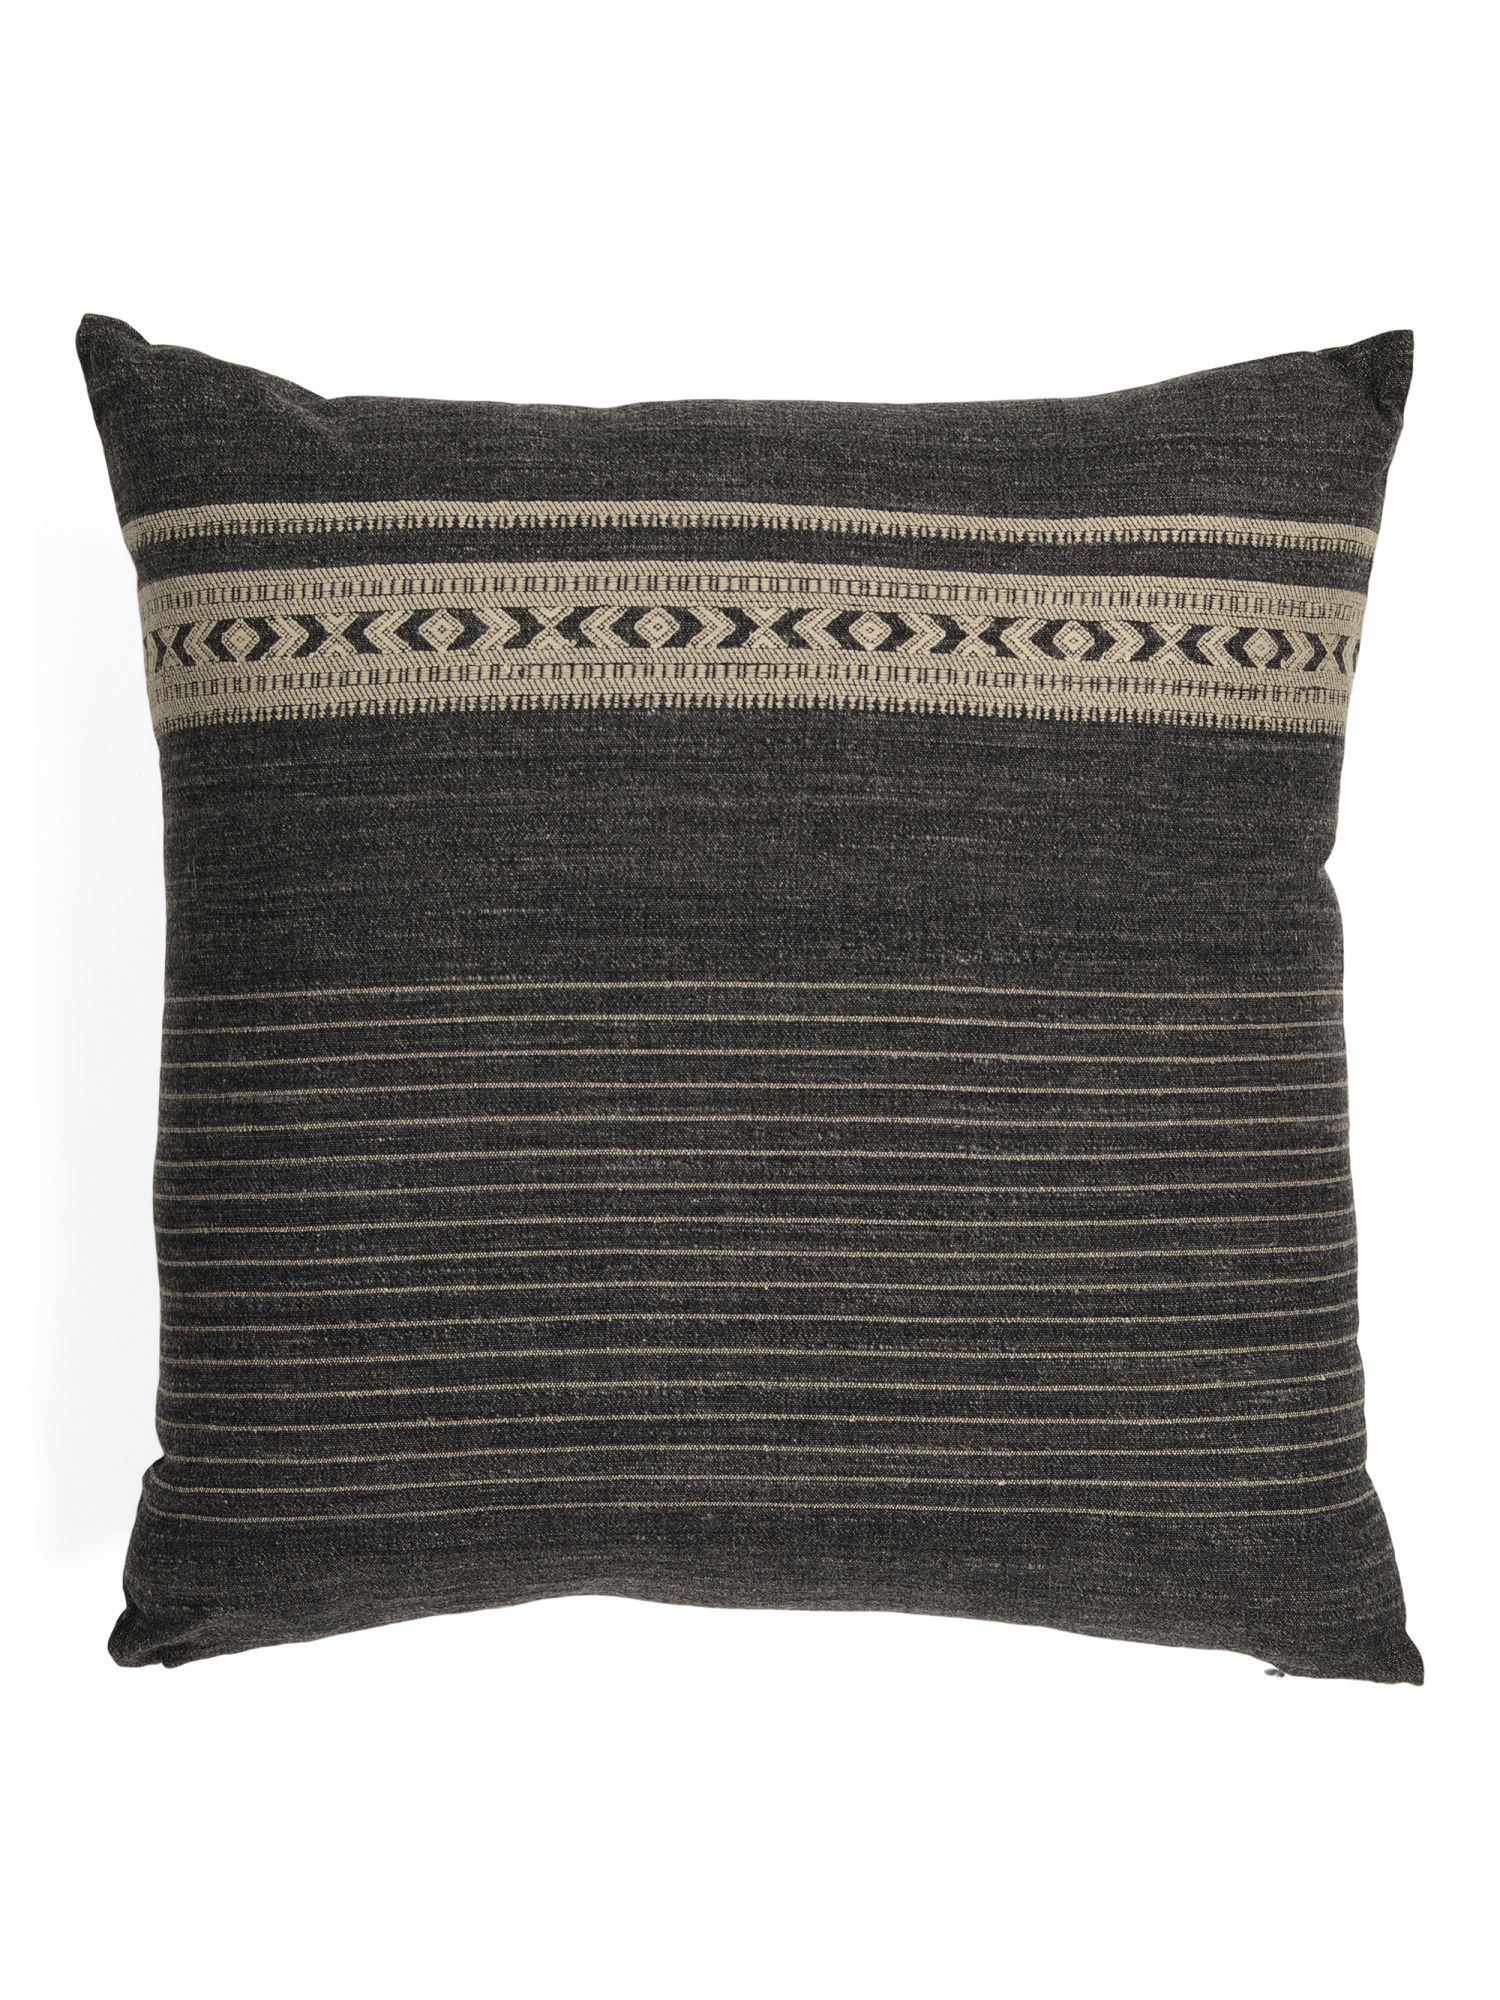 22x22 Linen Look Bhujodi Pillow | The Global Decor Shop | Marshalls | Marshalls